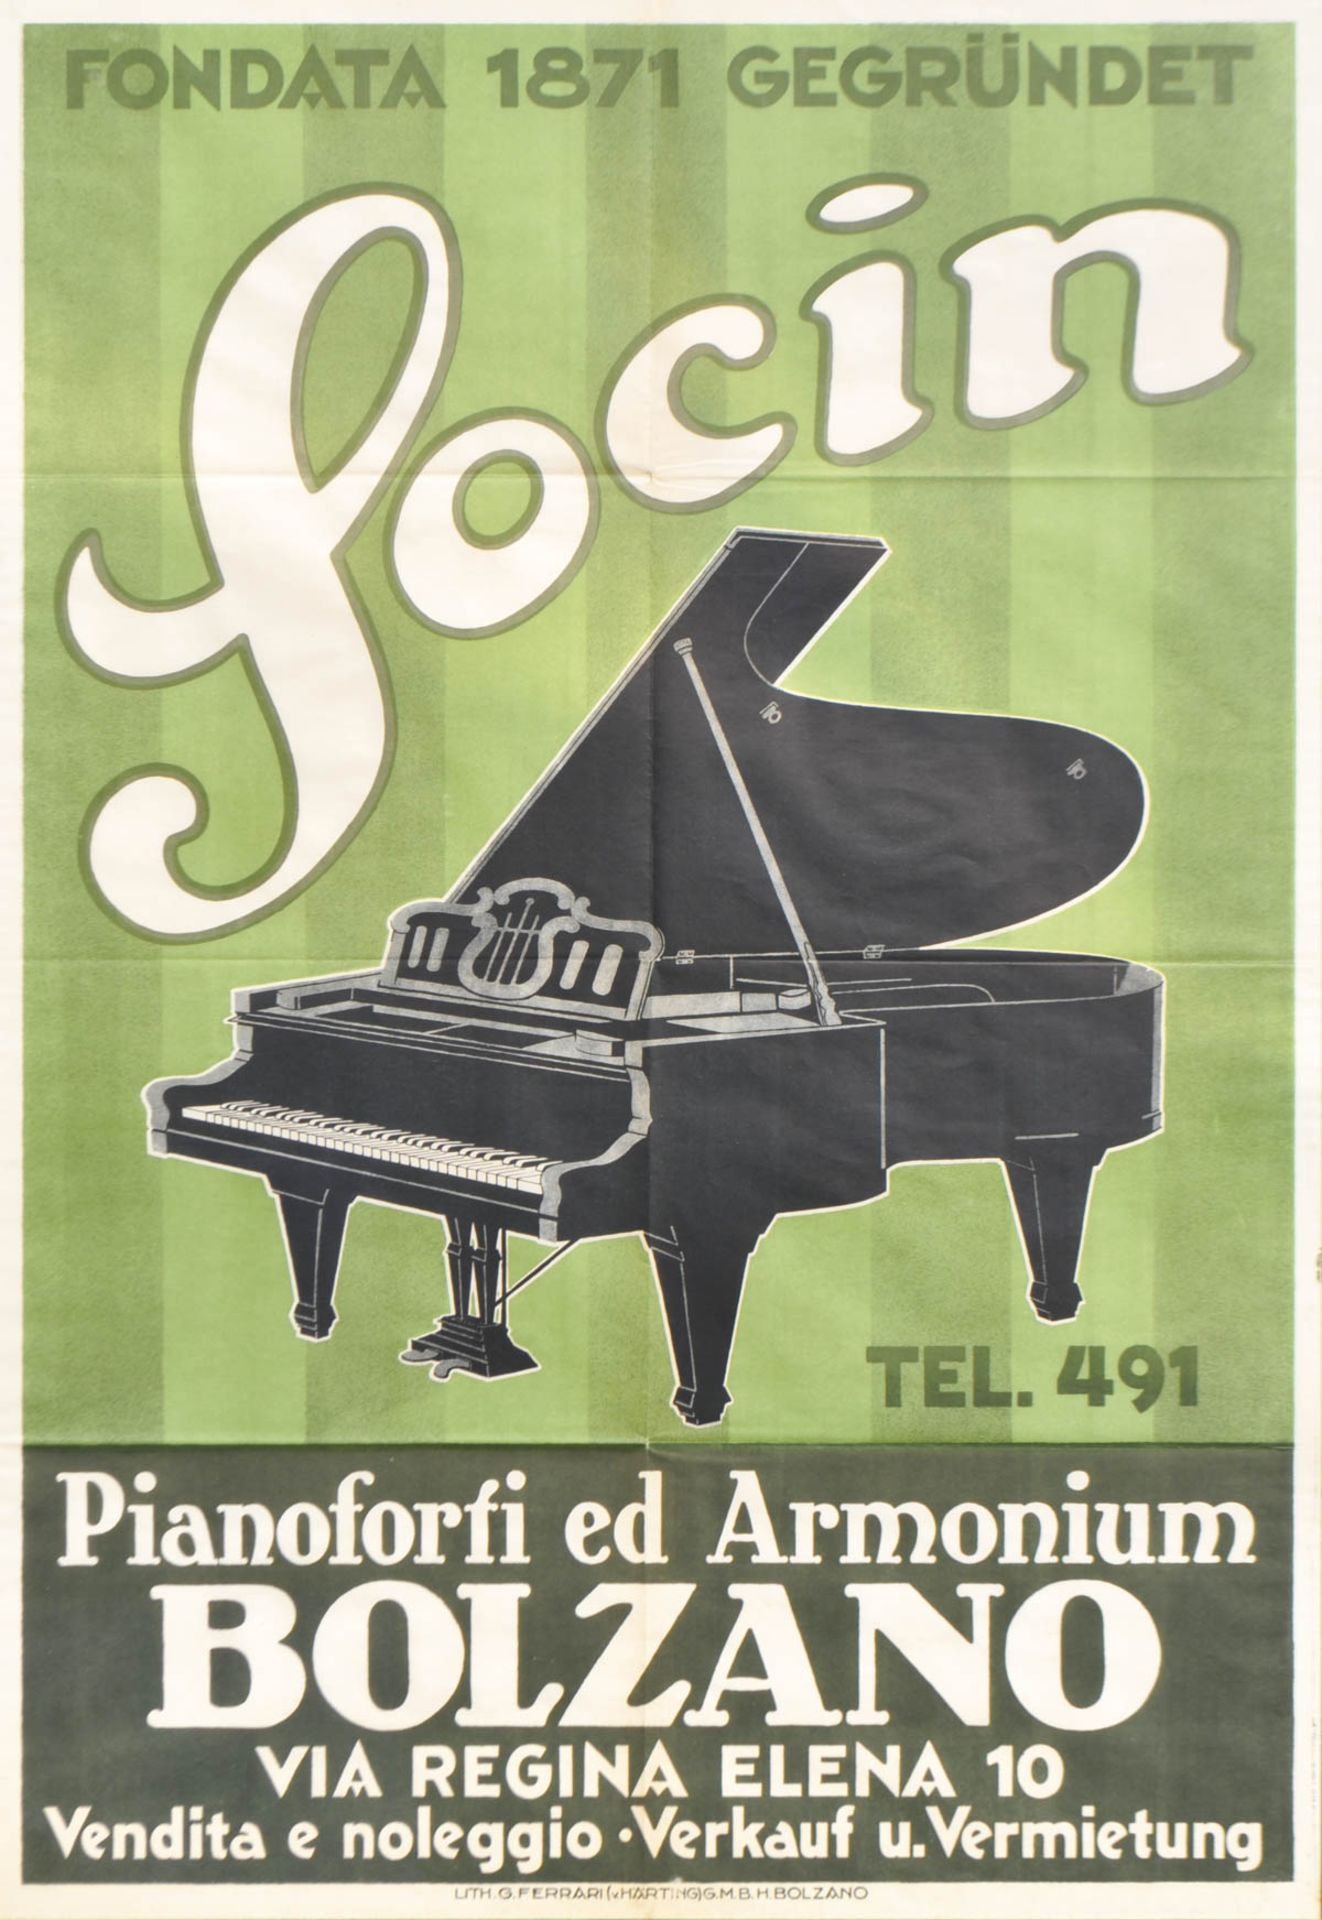 Anonym/Anonimo - Plakat sSocin - Pianoforti ed Armonium Bolzanos1920/30